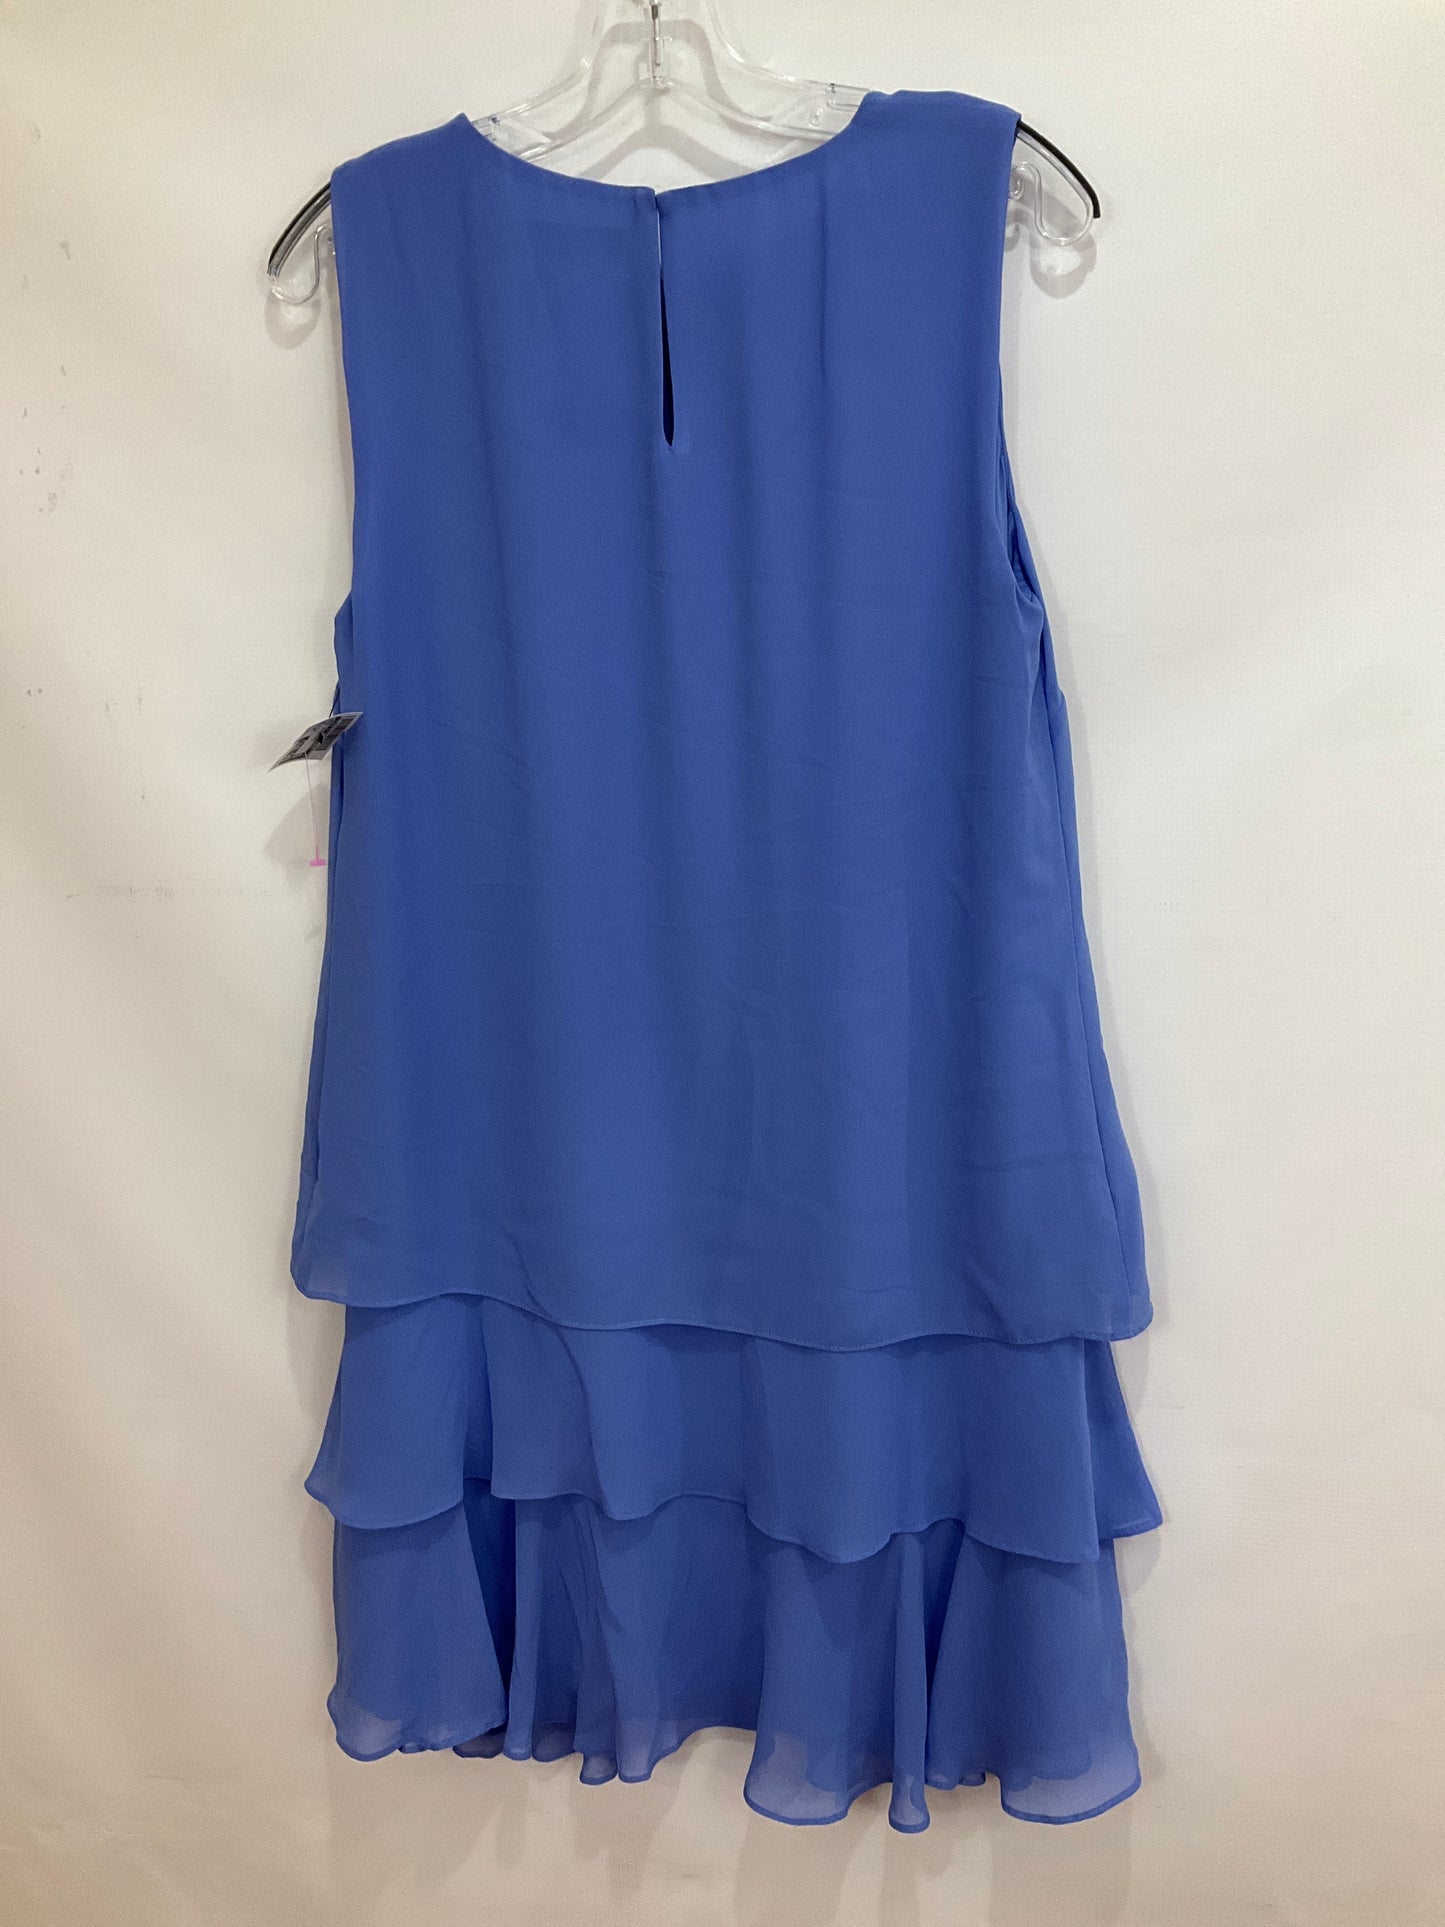 Dress Casual Midi By Lauren By Ralph Lauren  Size: 10